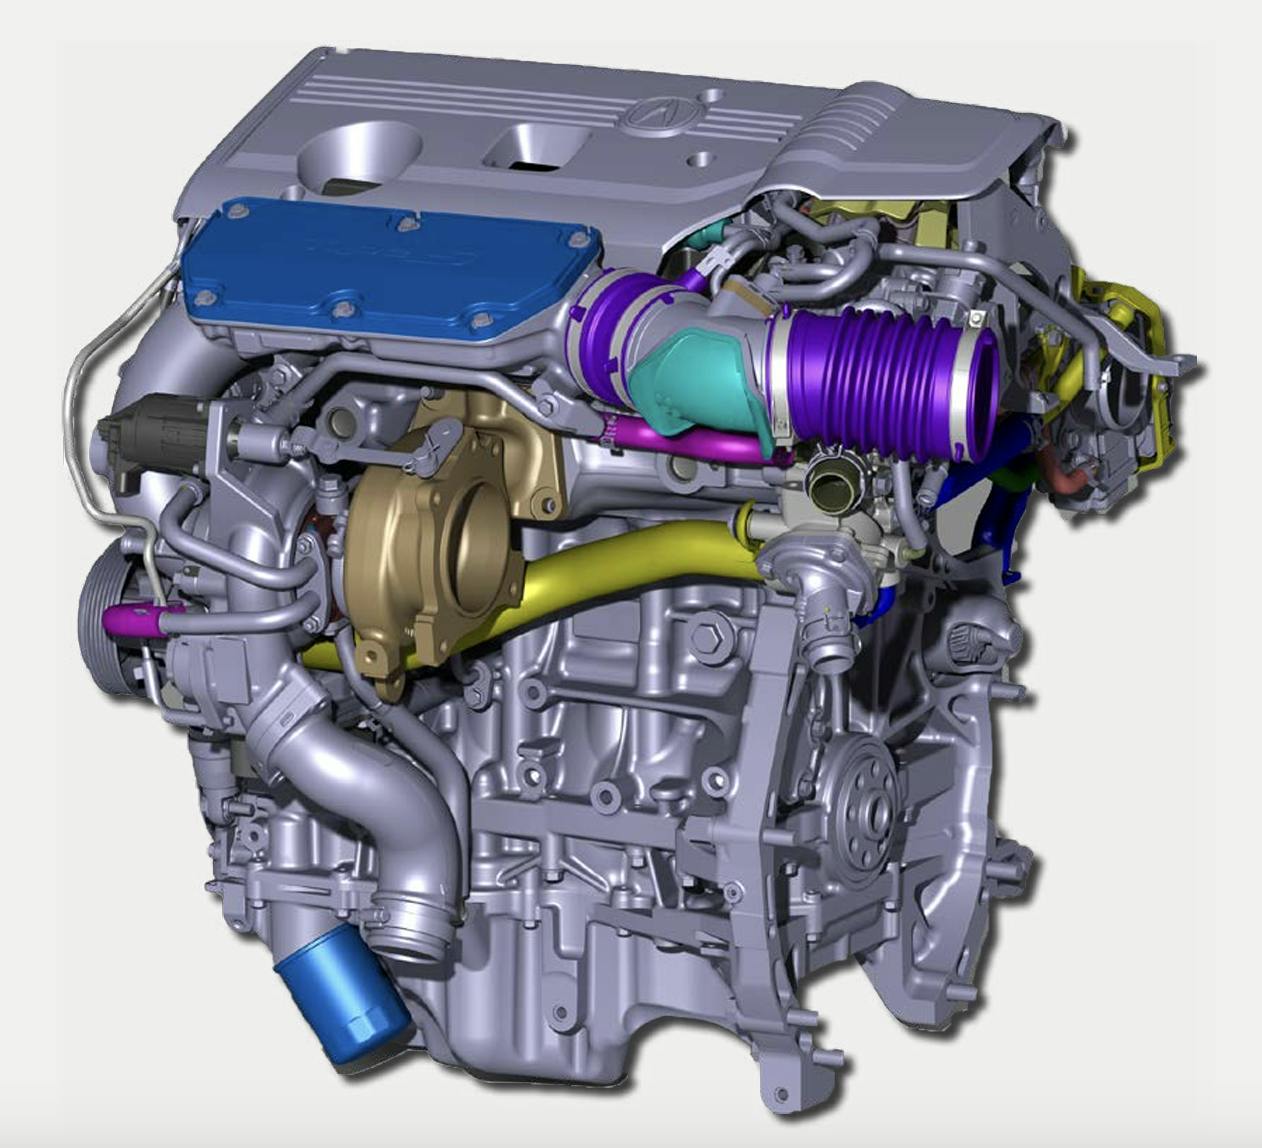 Acrua Integra Type S engine